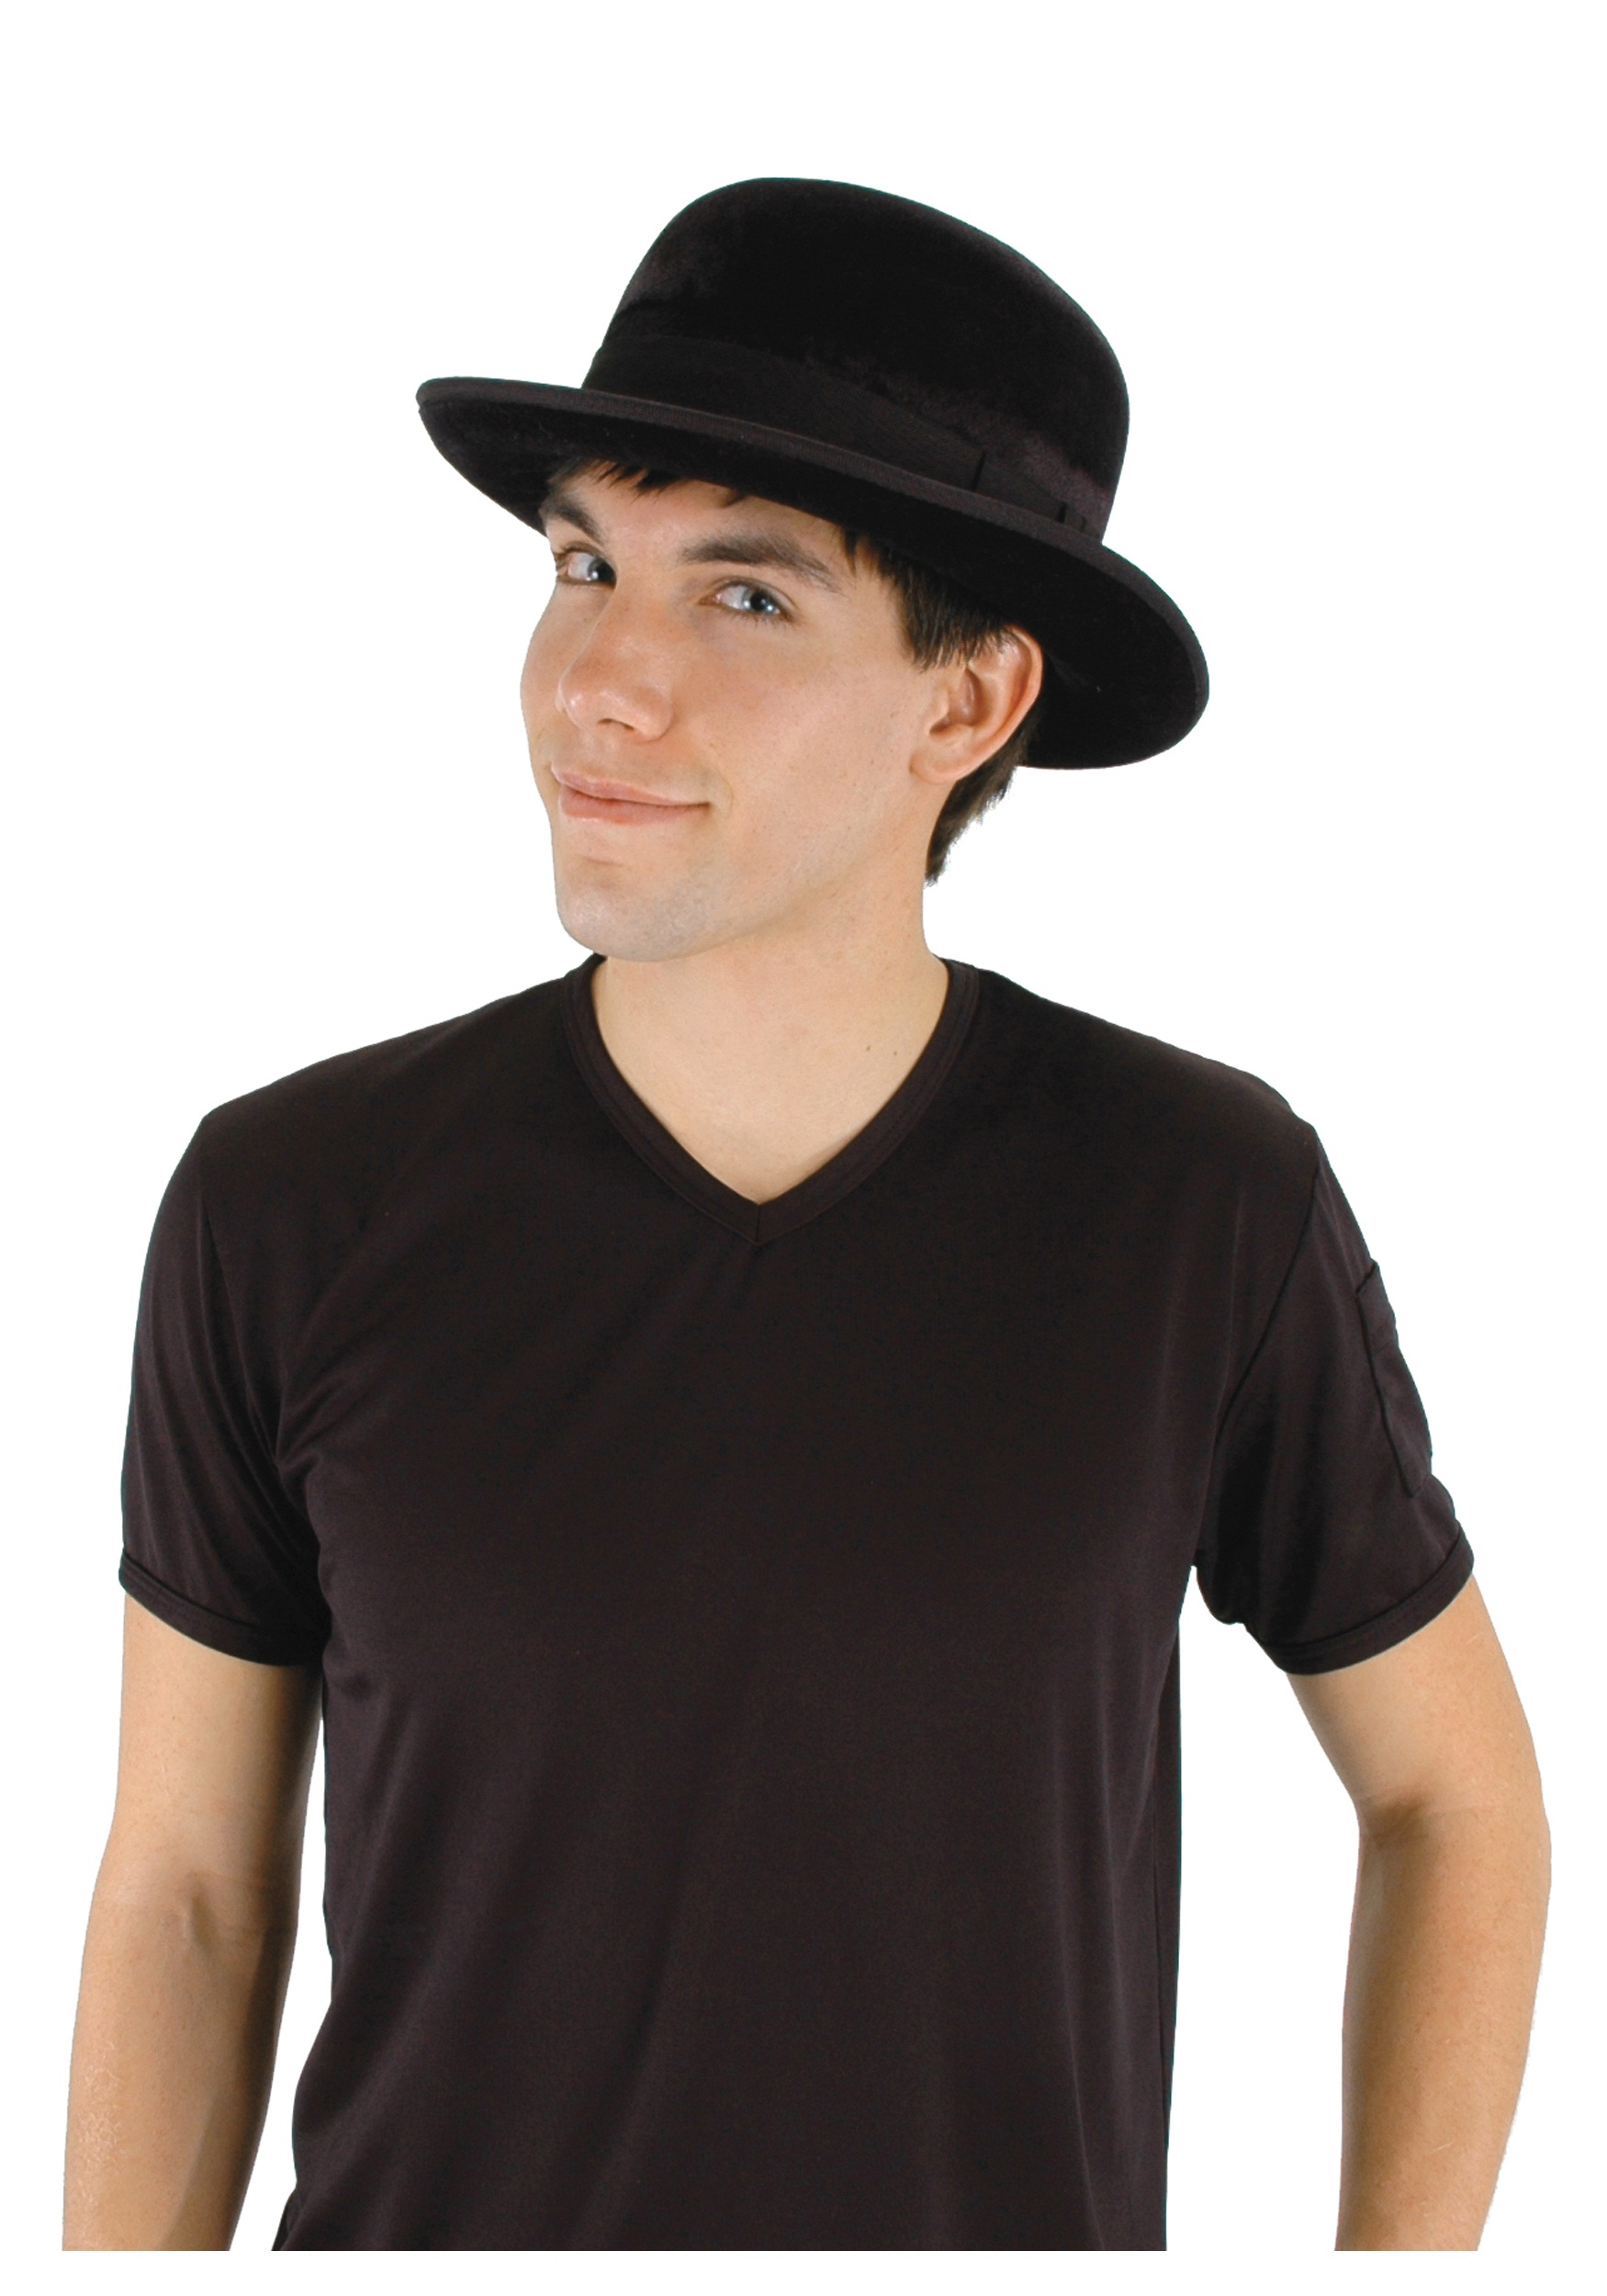 Men's Black Velour Bowler Hat